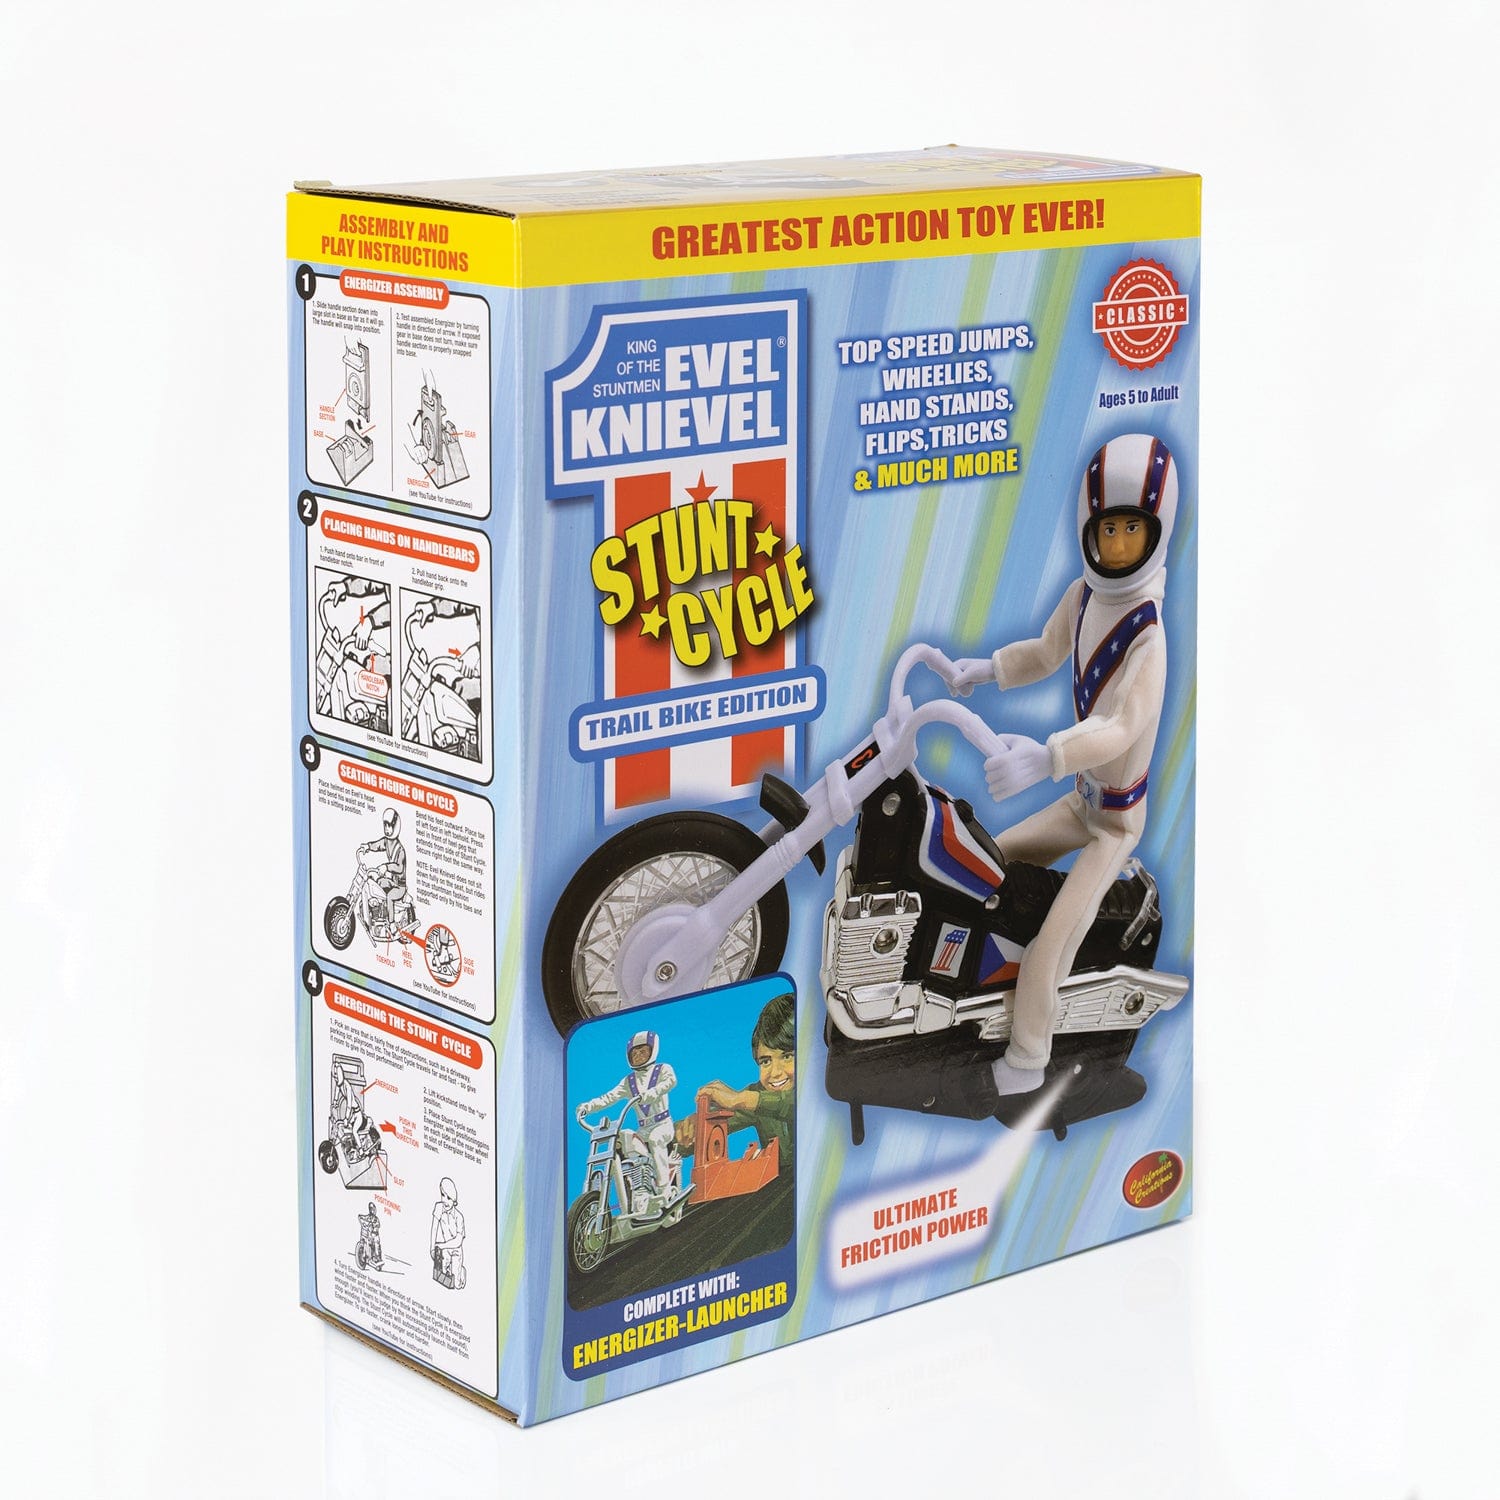 Evel Knievel Stunt Cycle - Trailbike Edition / Black